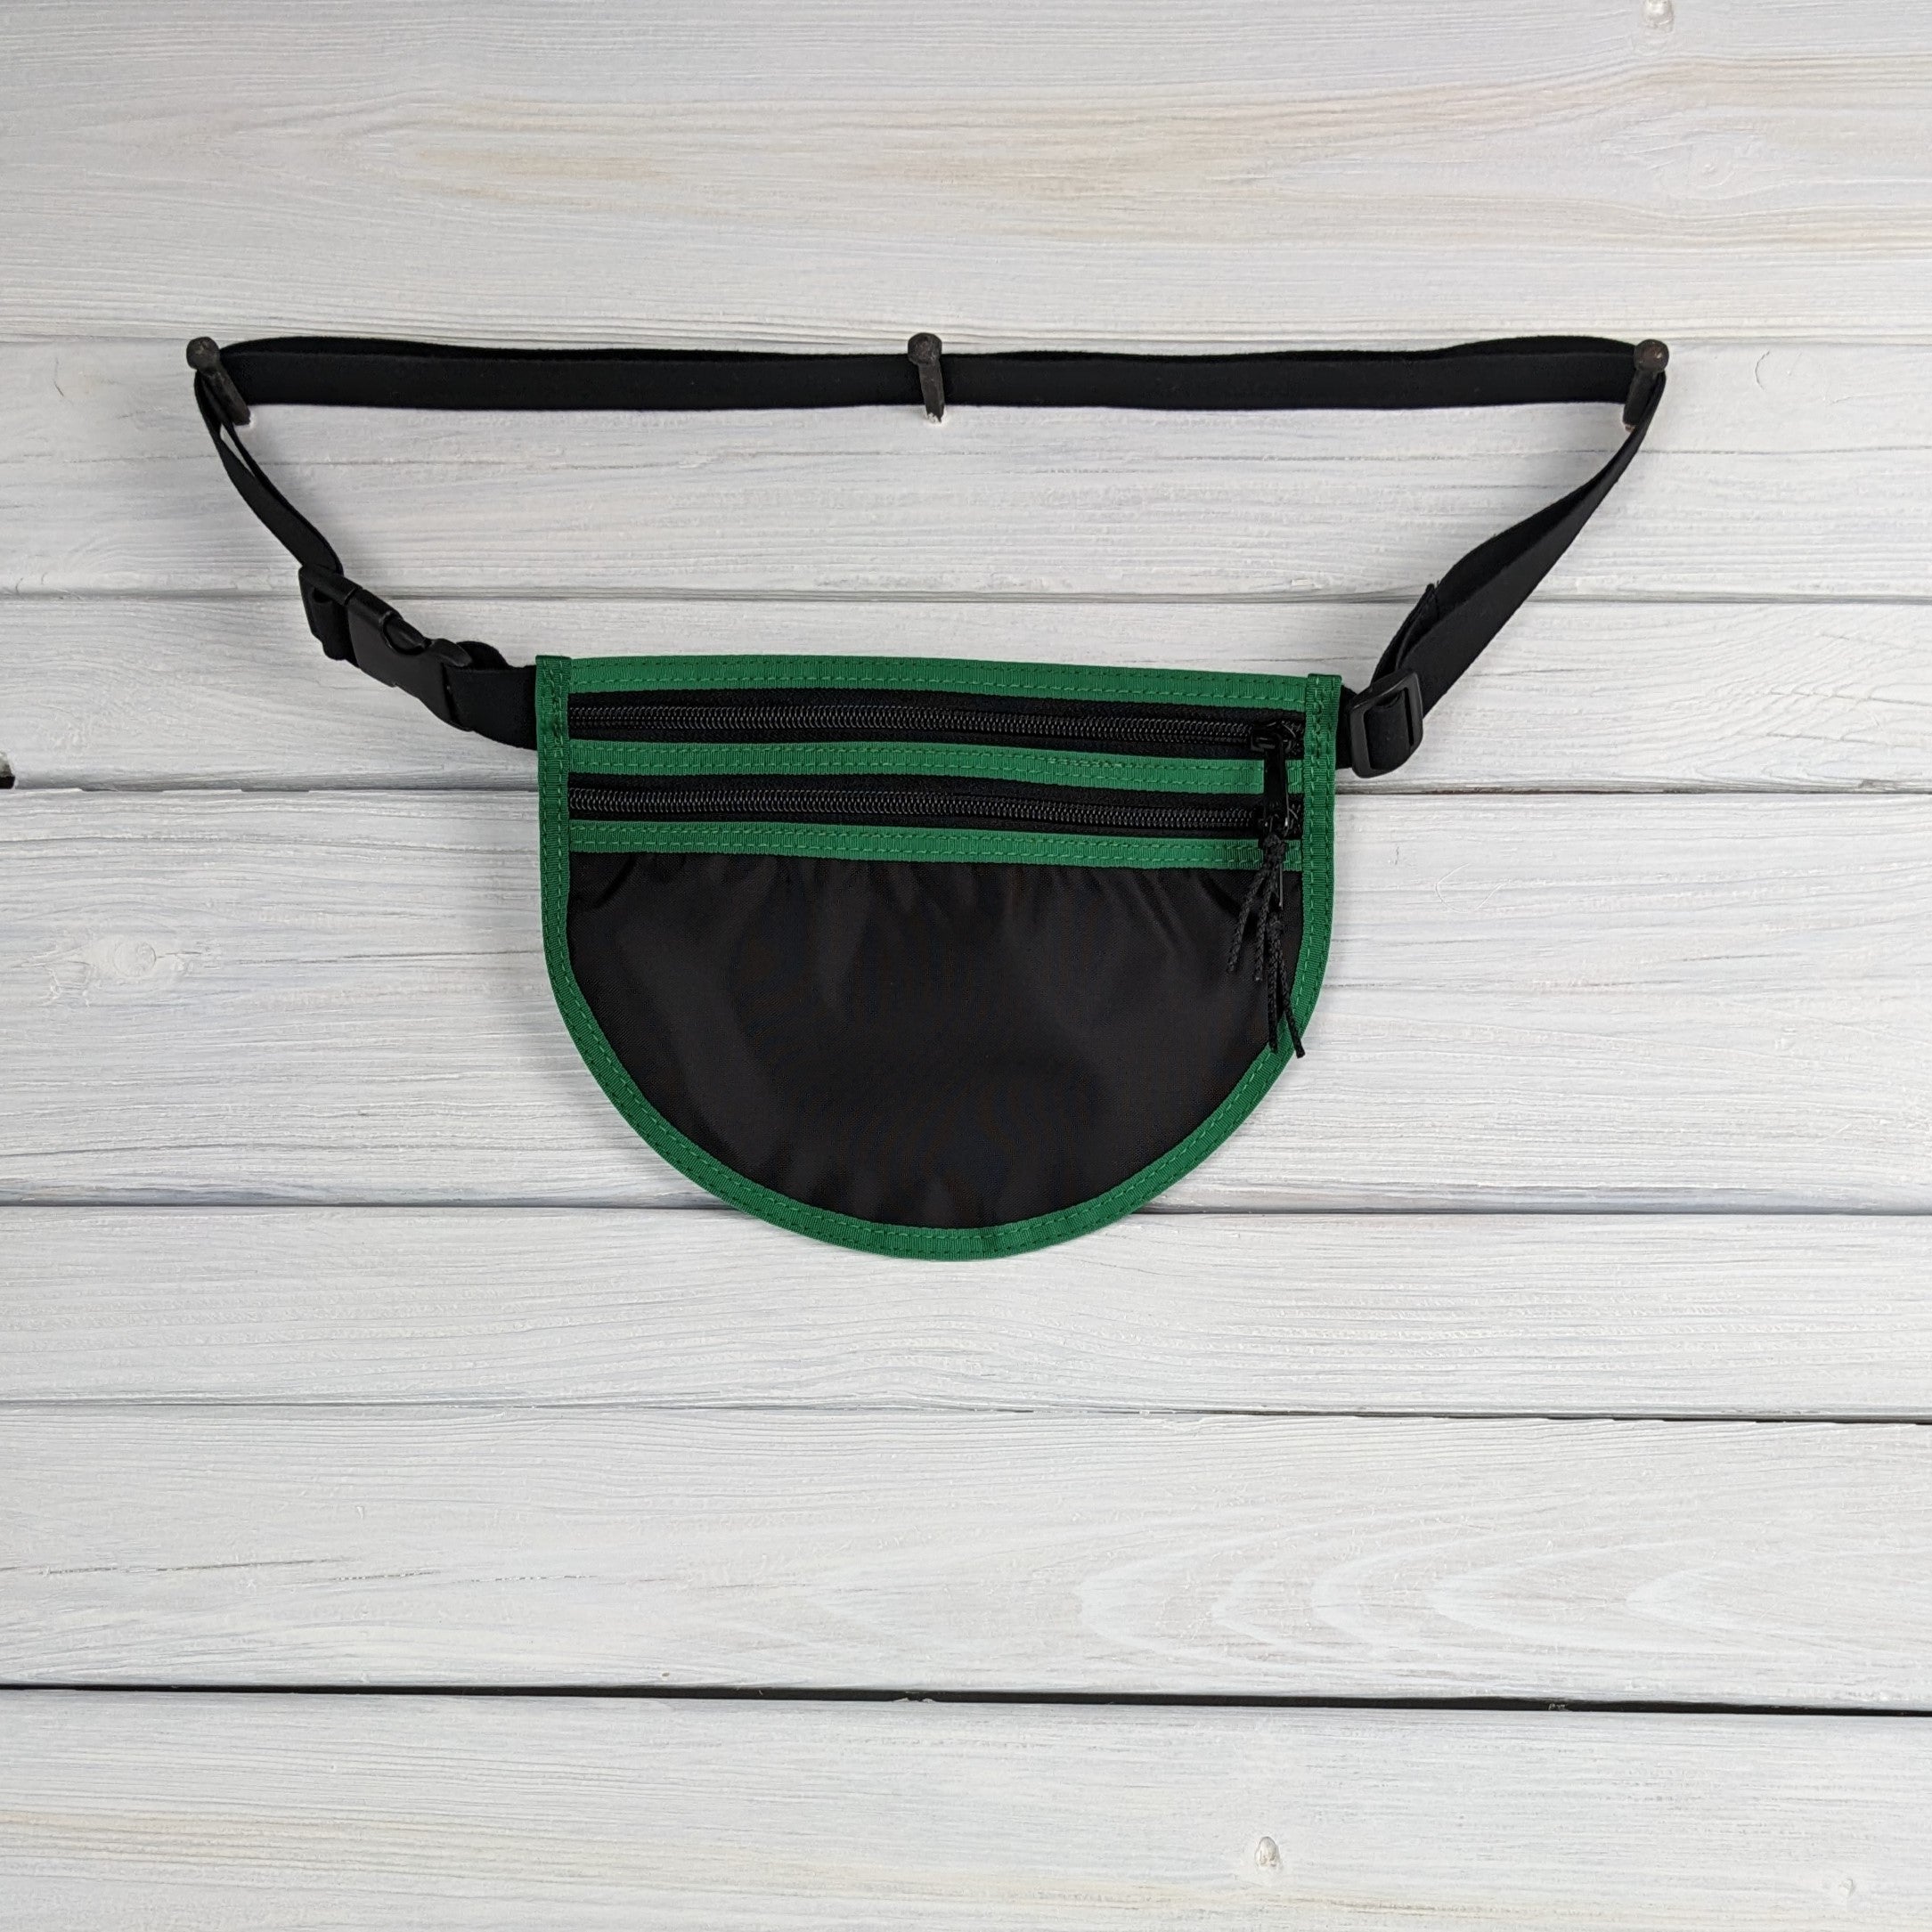 Black and Green Waist/Cross Body Bag